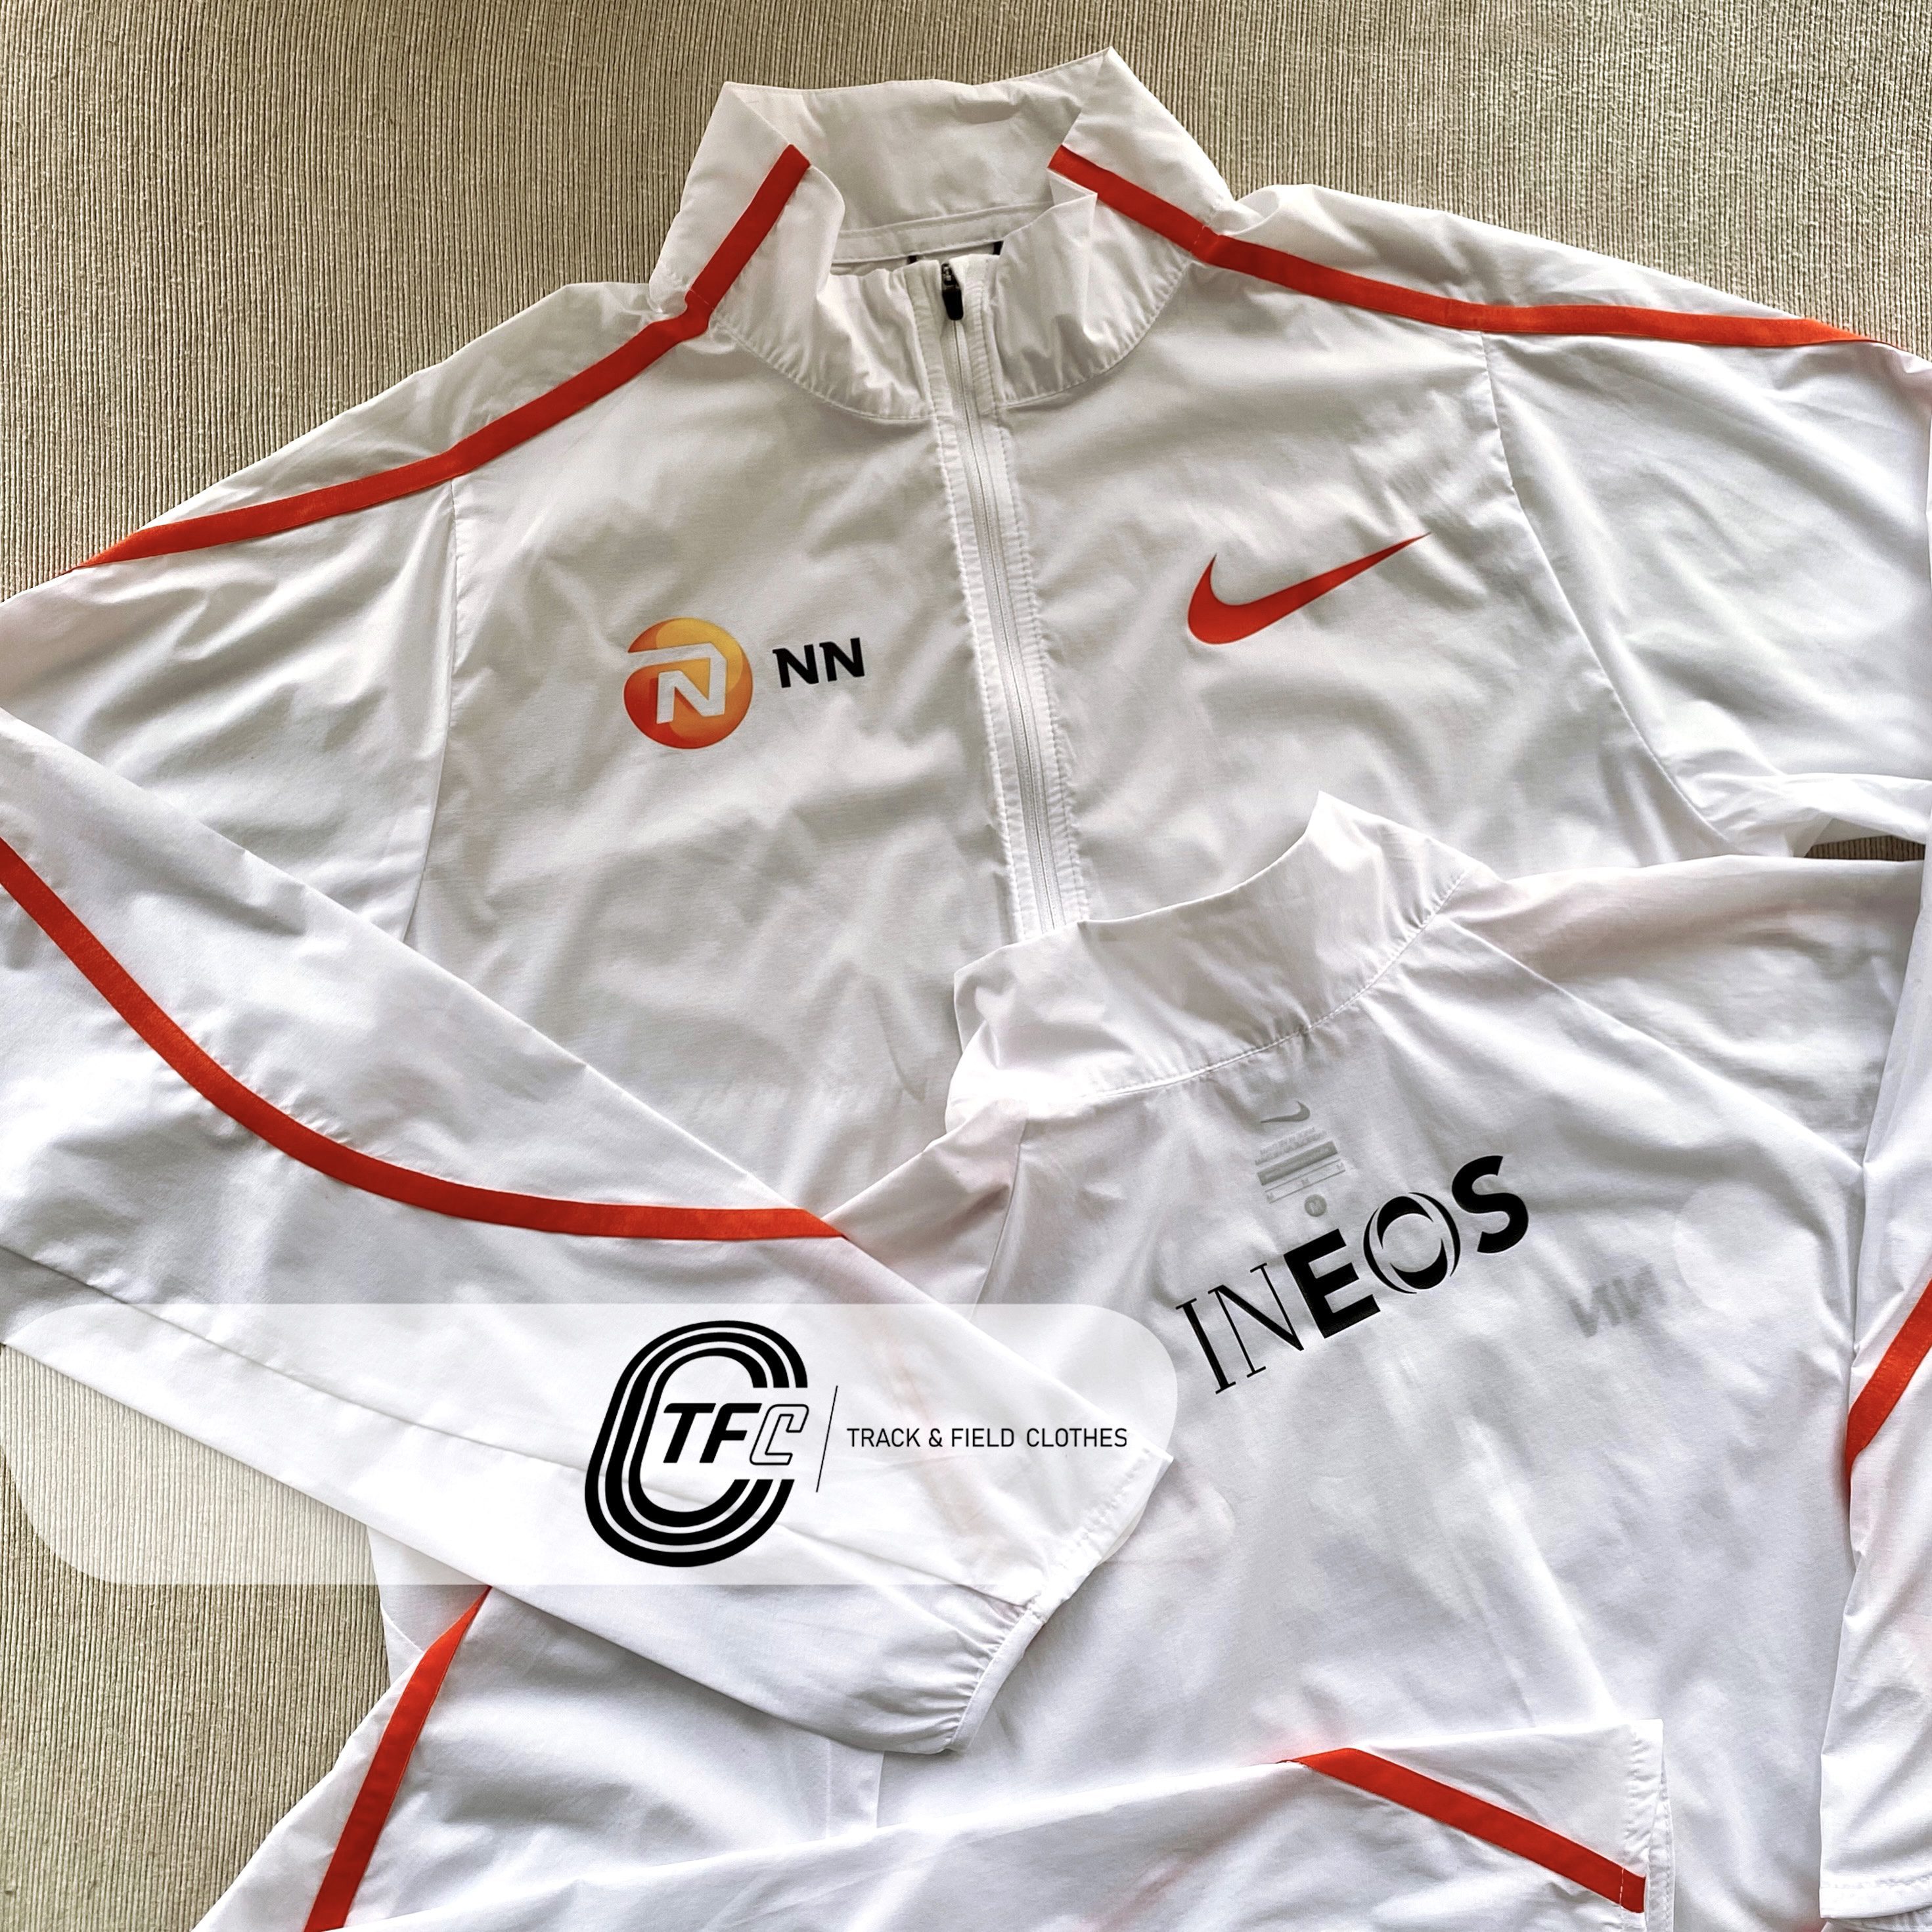 INEOS x Nike 2021 NN Running Team Pro Elite Lightweight Track